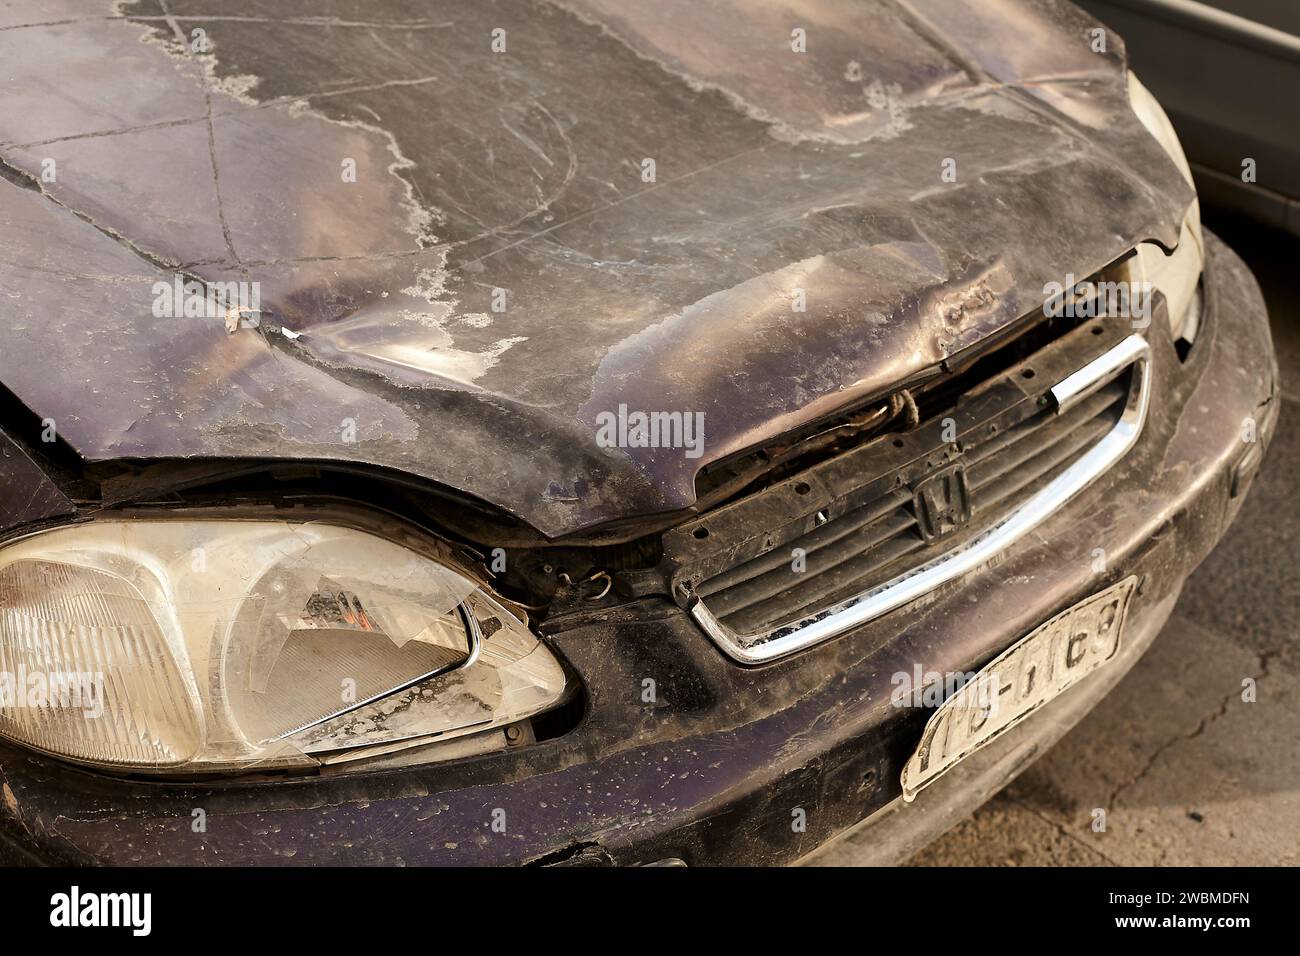 honda car crash , front detail Stock Photo